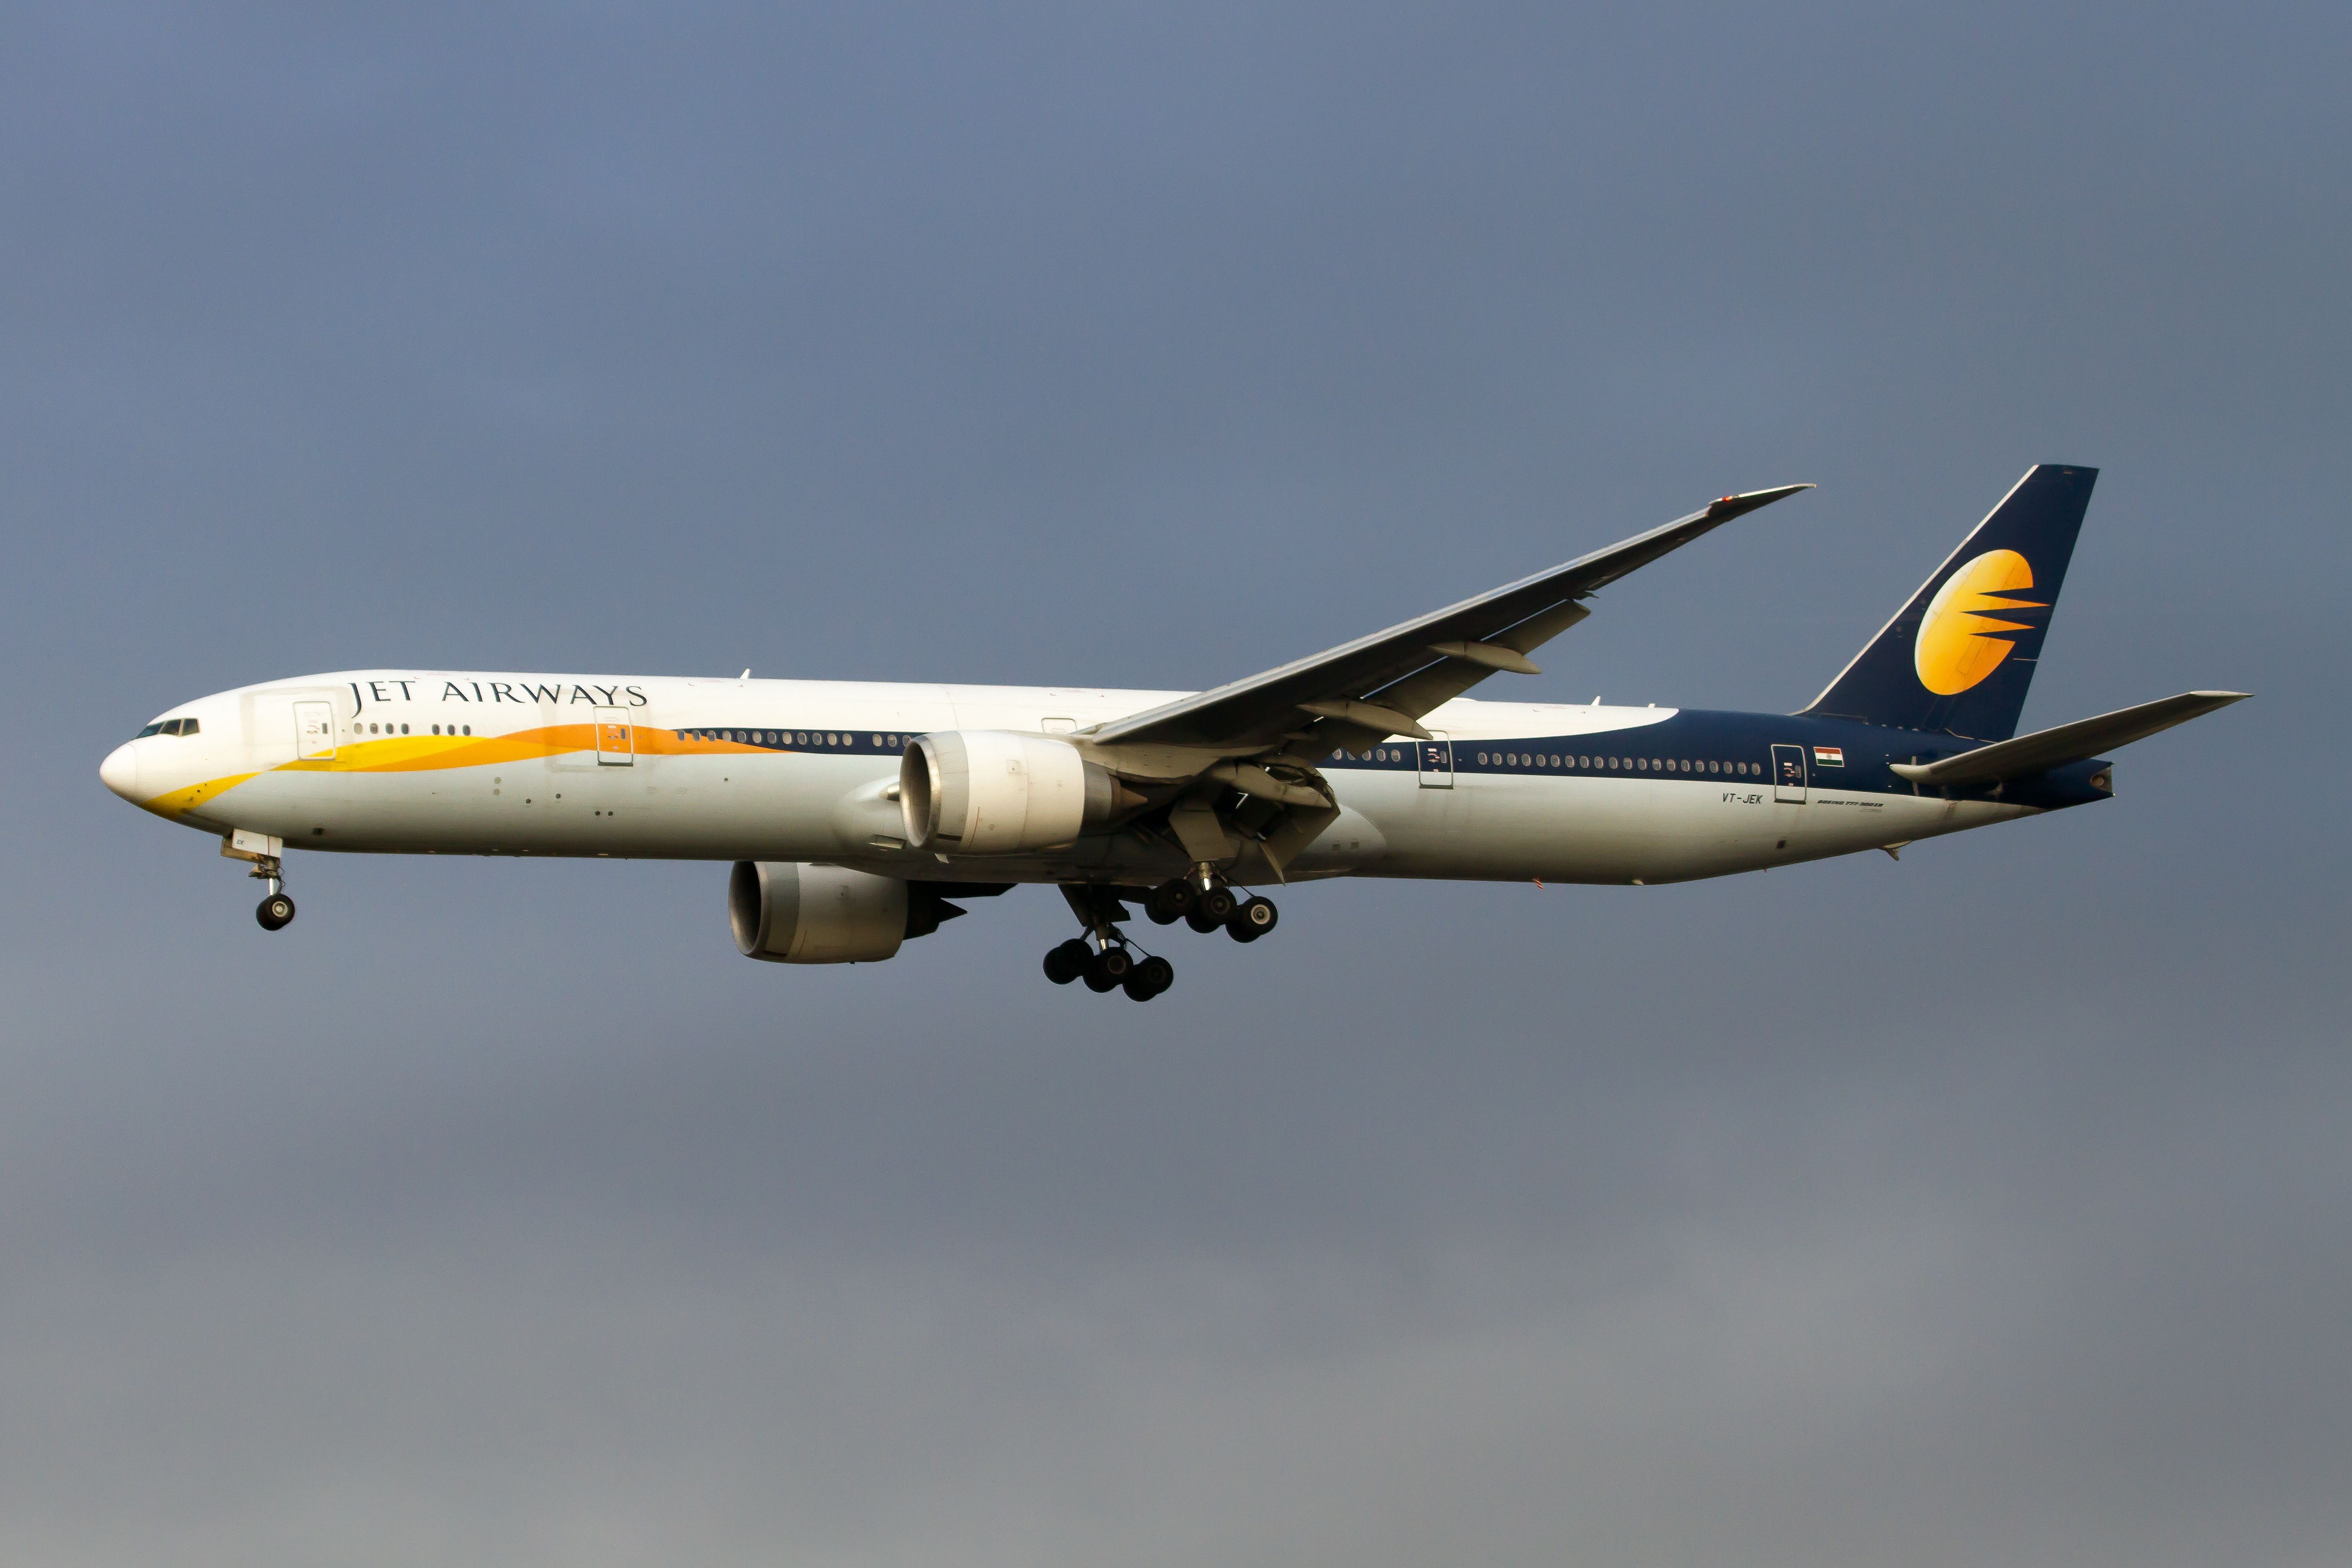 A Jet Airways Boeing 777-300ER landing at London Heathrow airport